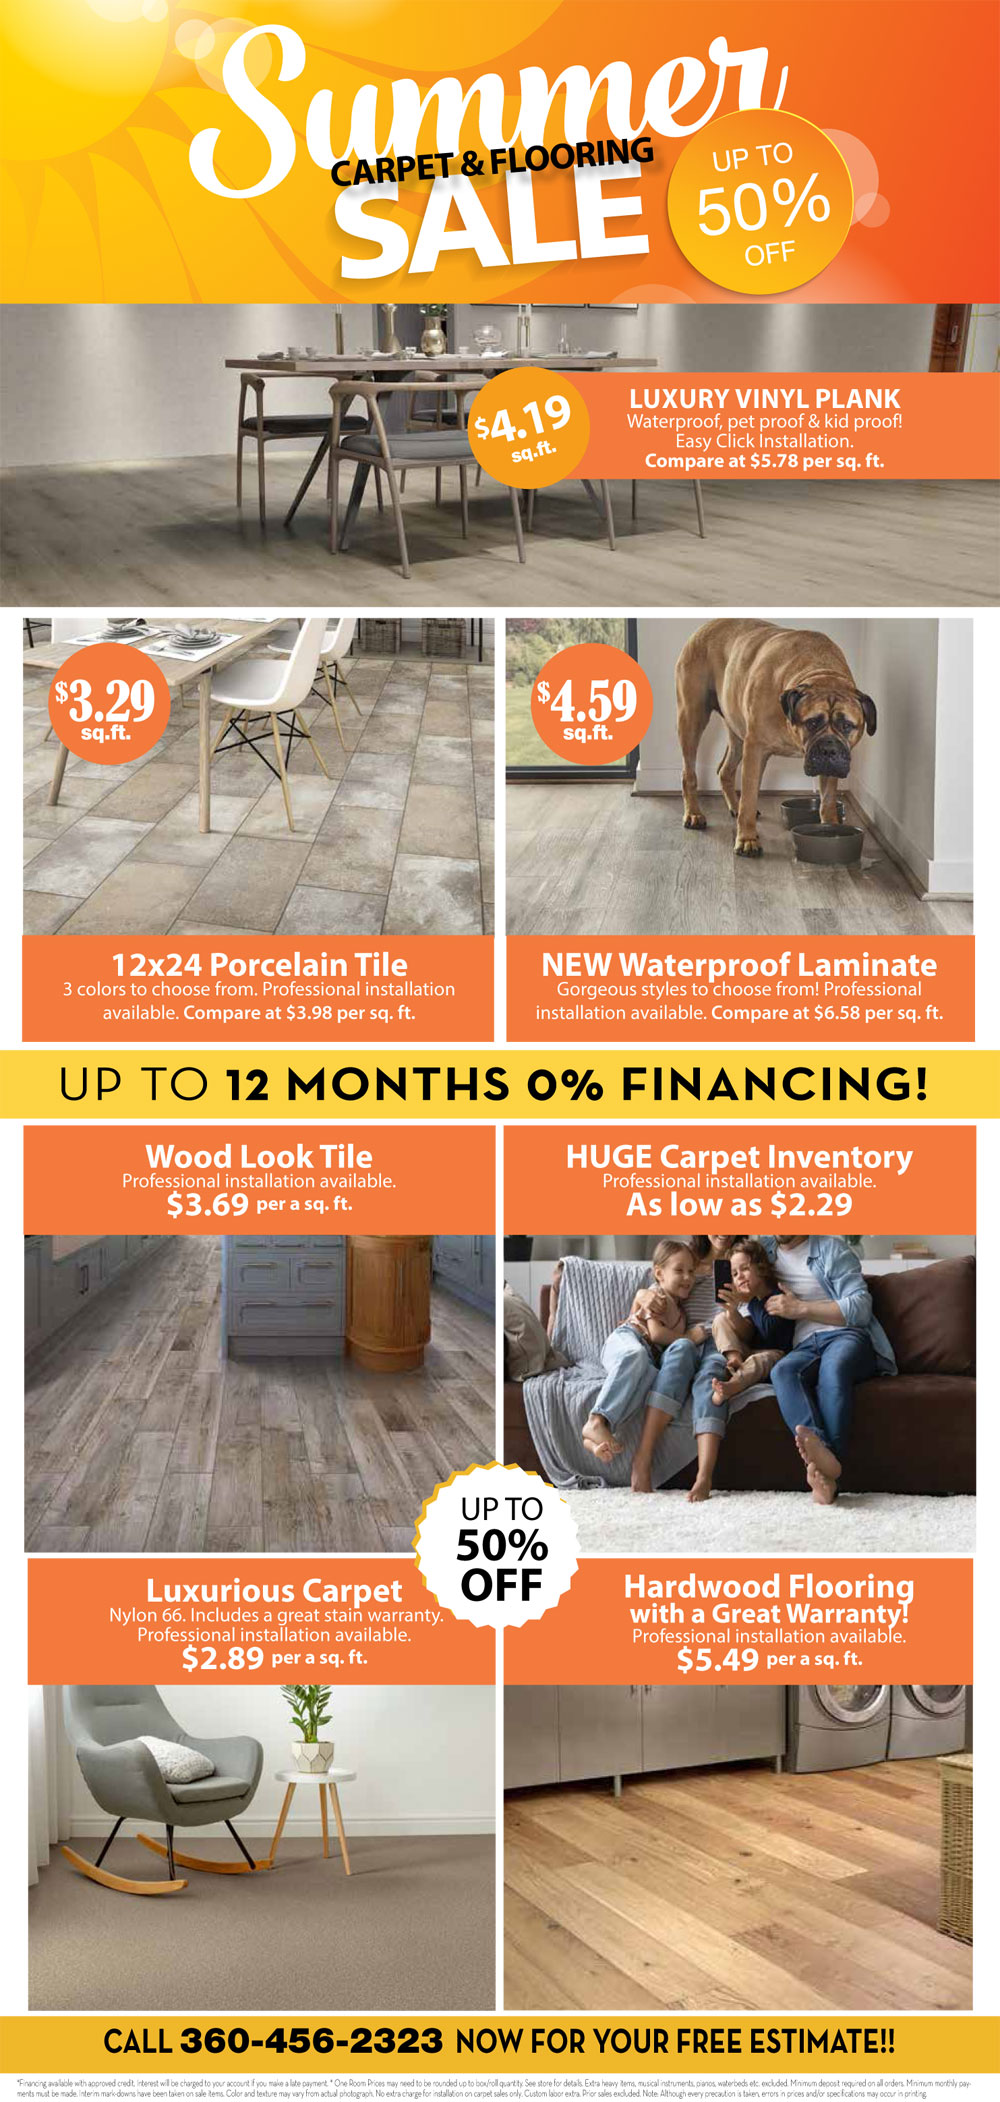 Hardwood, laminate, carpet, luxury vinyl plank and ceramic flooring